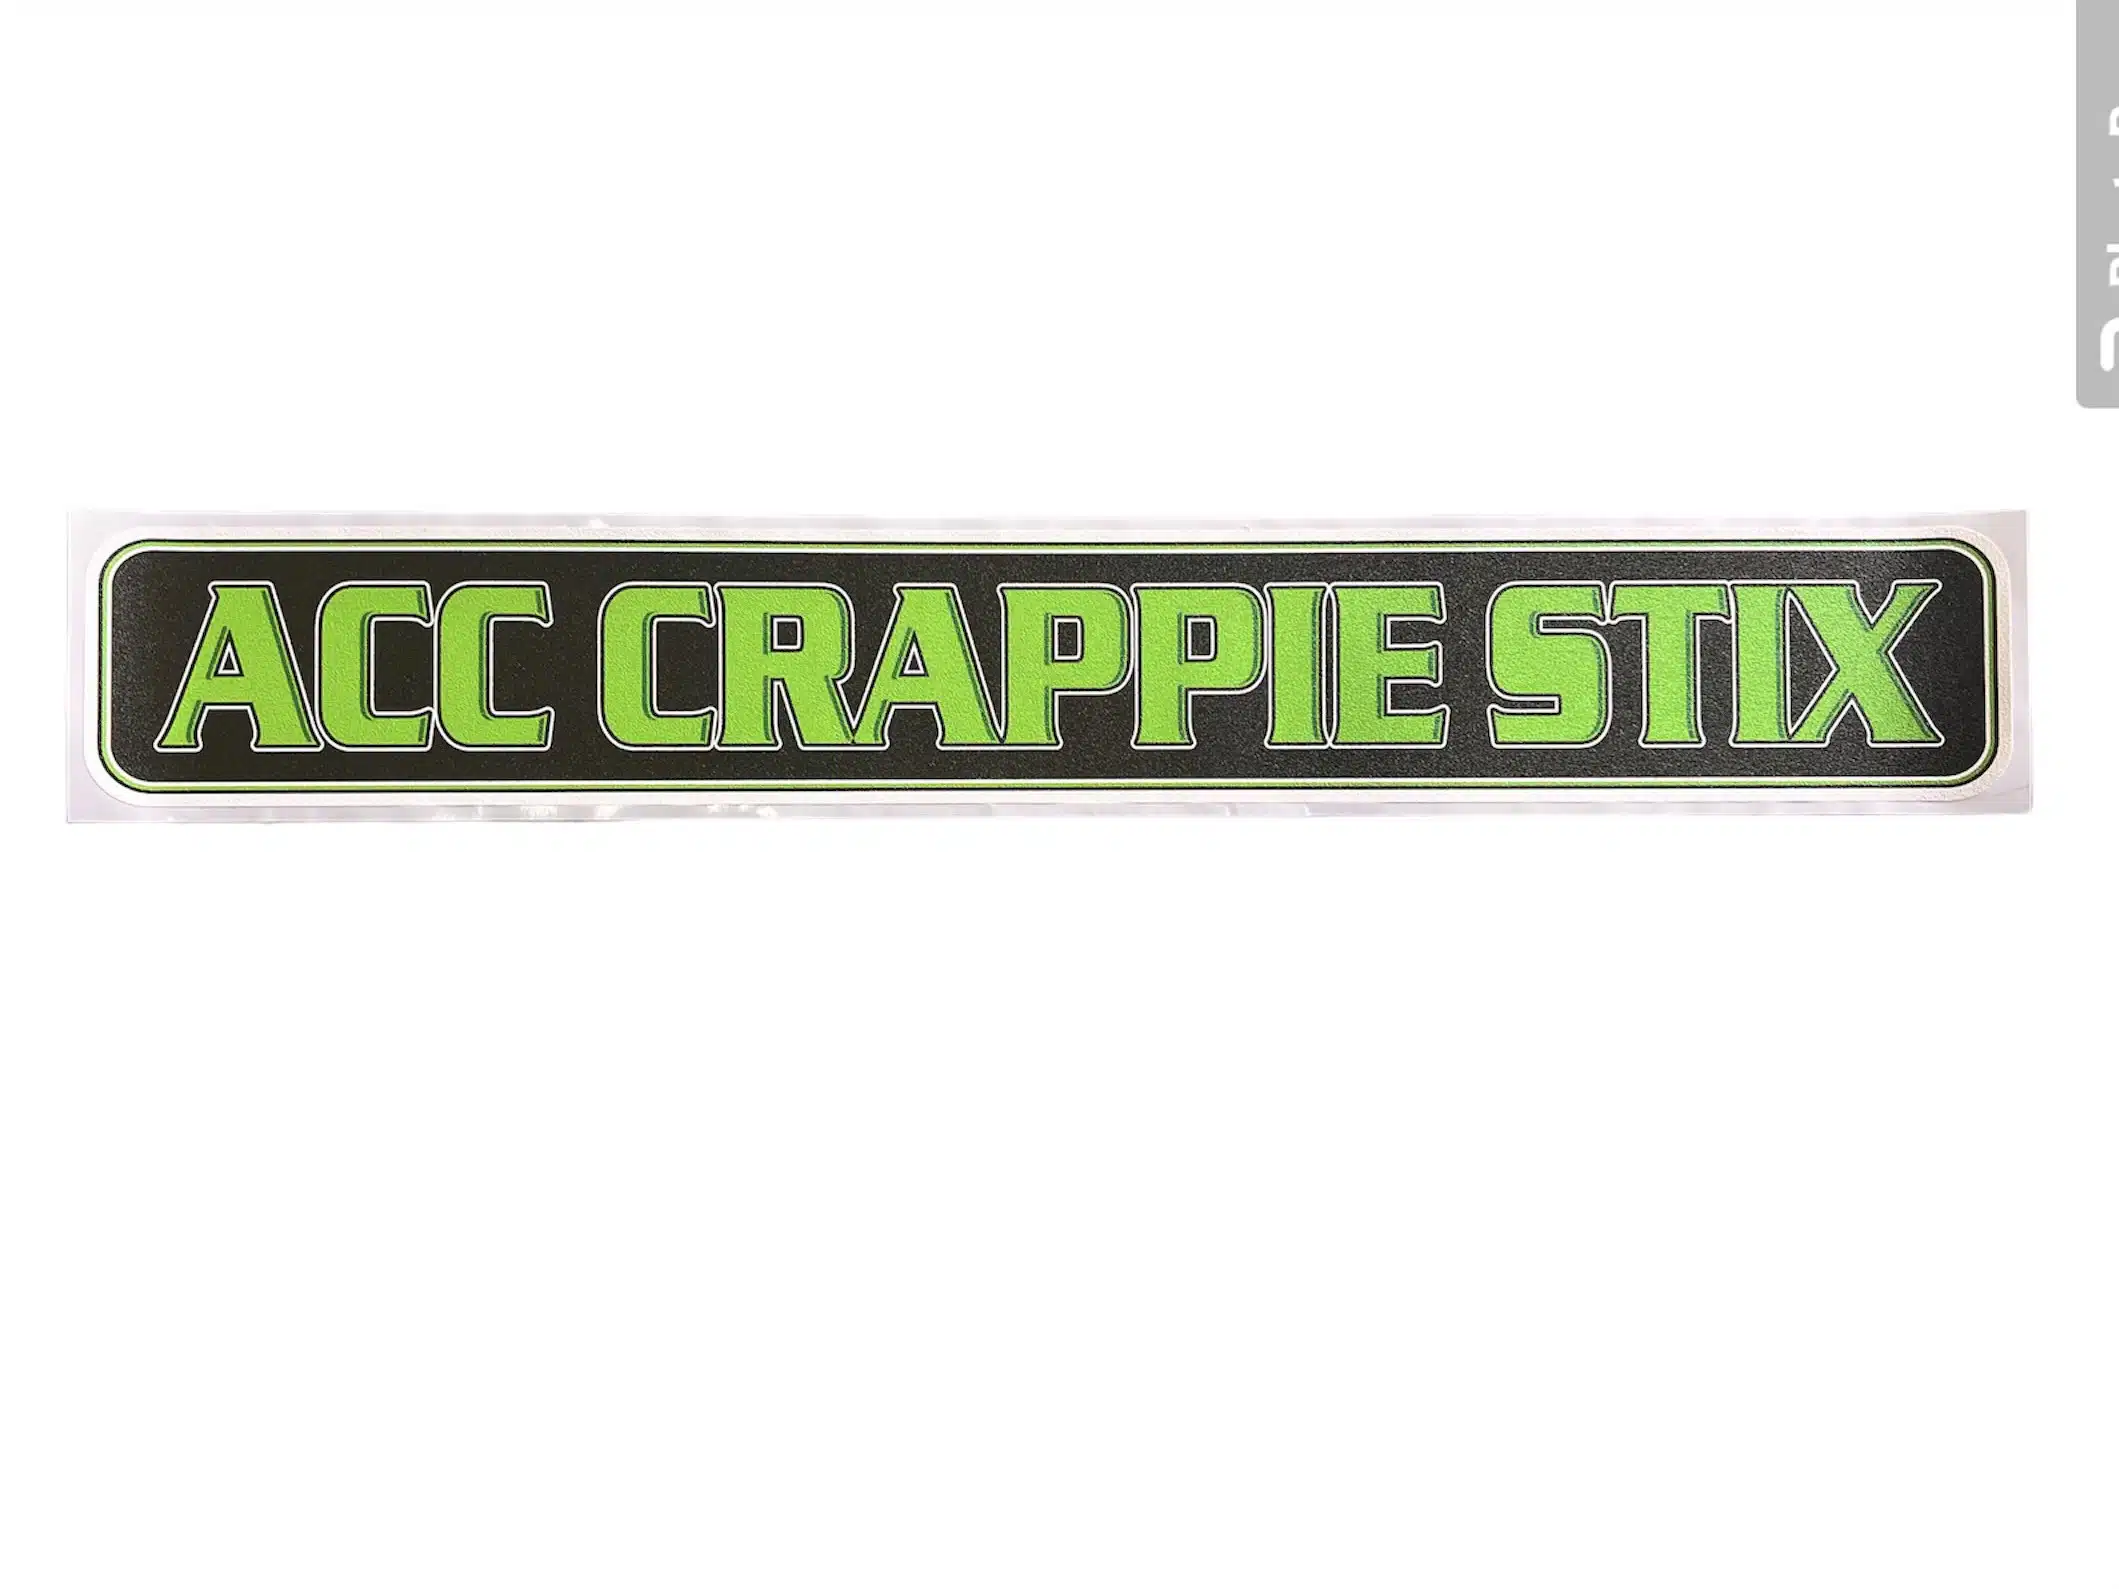 ACC Crappie Stix Carpet Decal